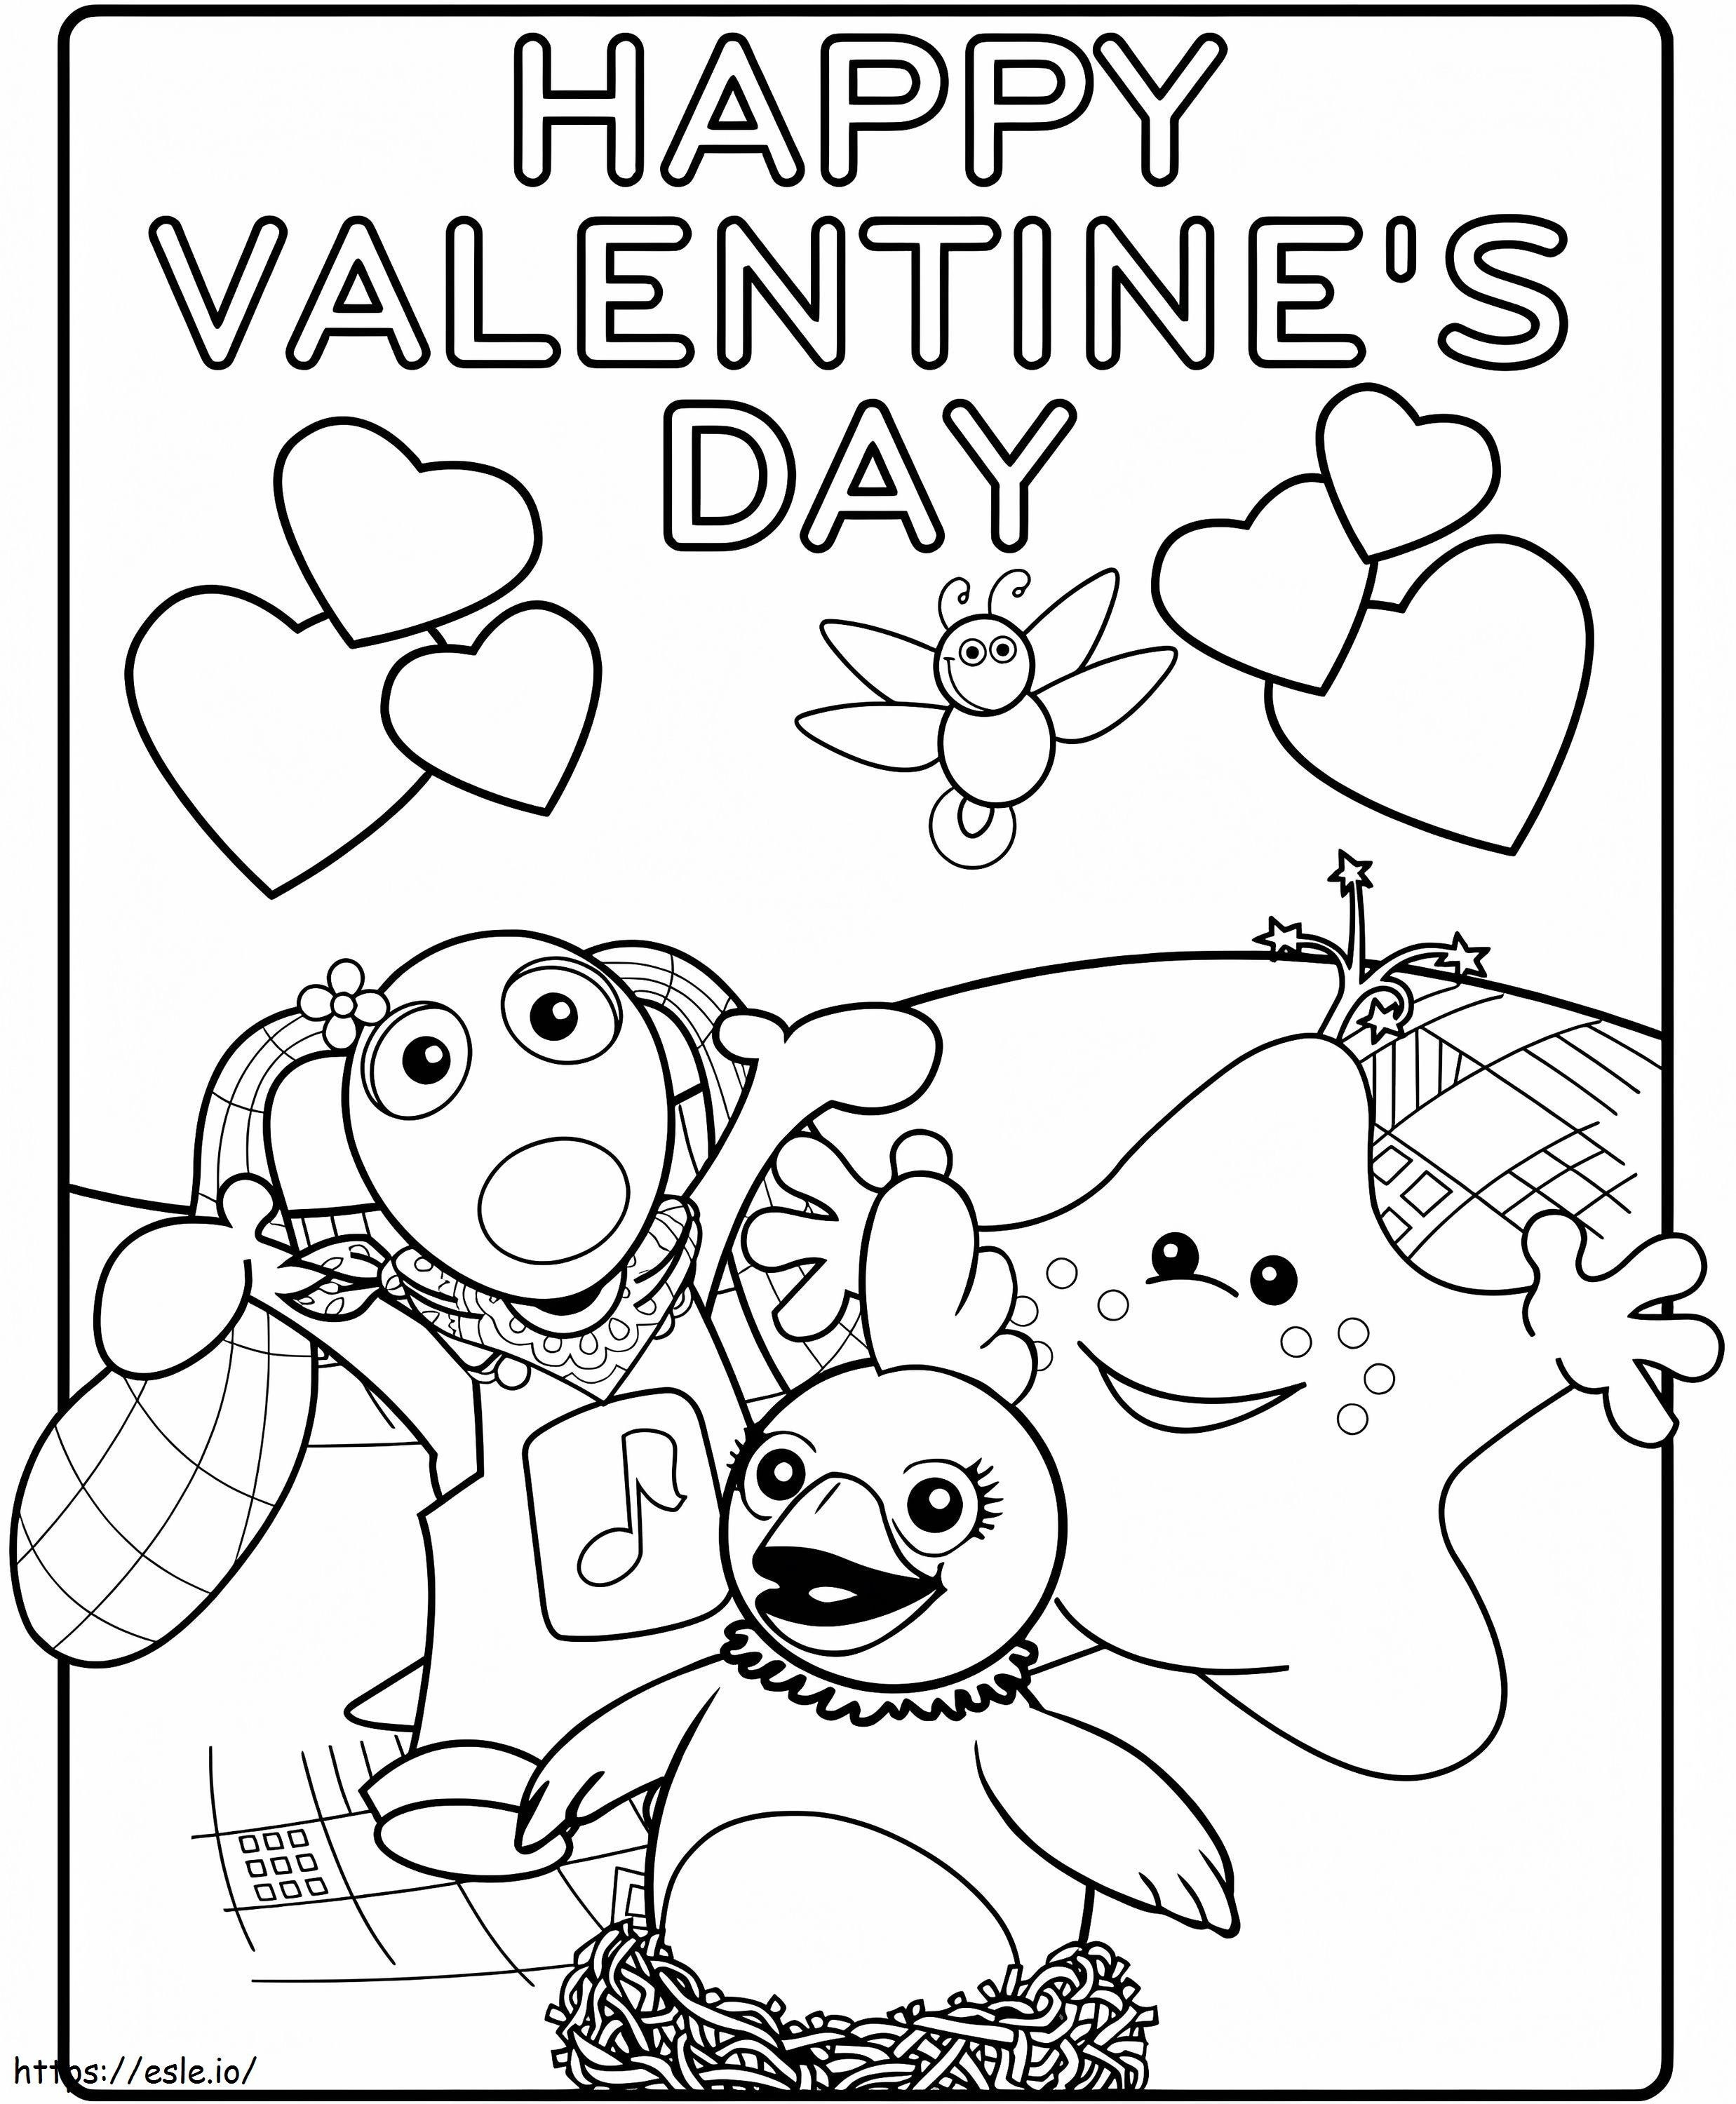 Tarjeta de San Valentín de dibujos animados para colorear